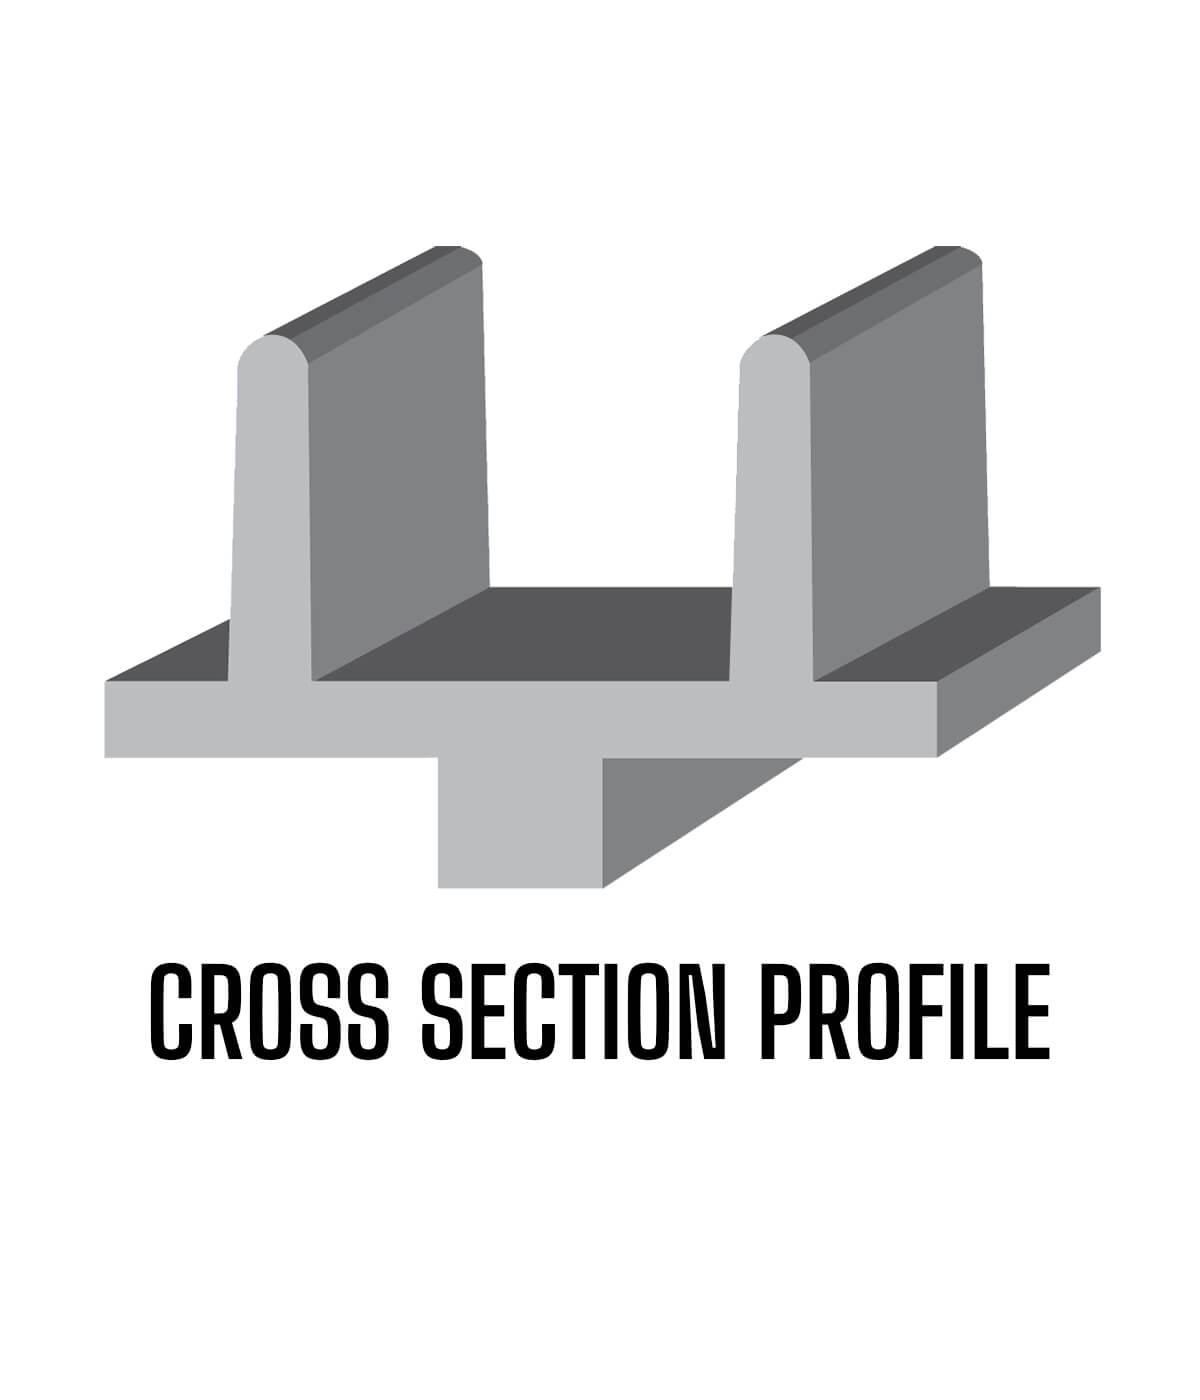 C&A Pro Mini Ski cross section profile